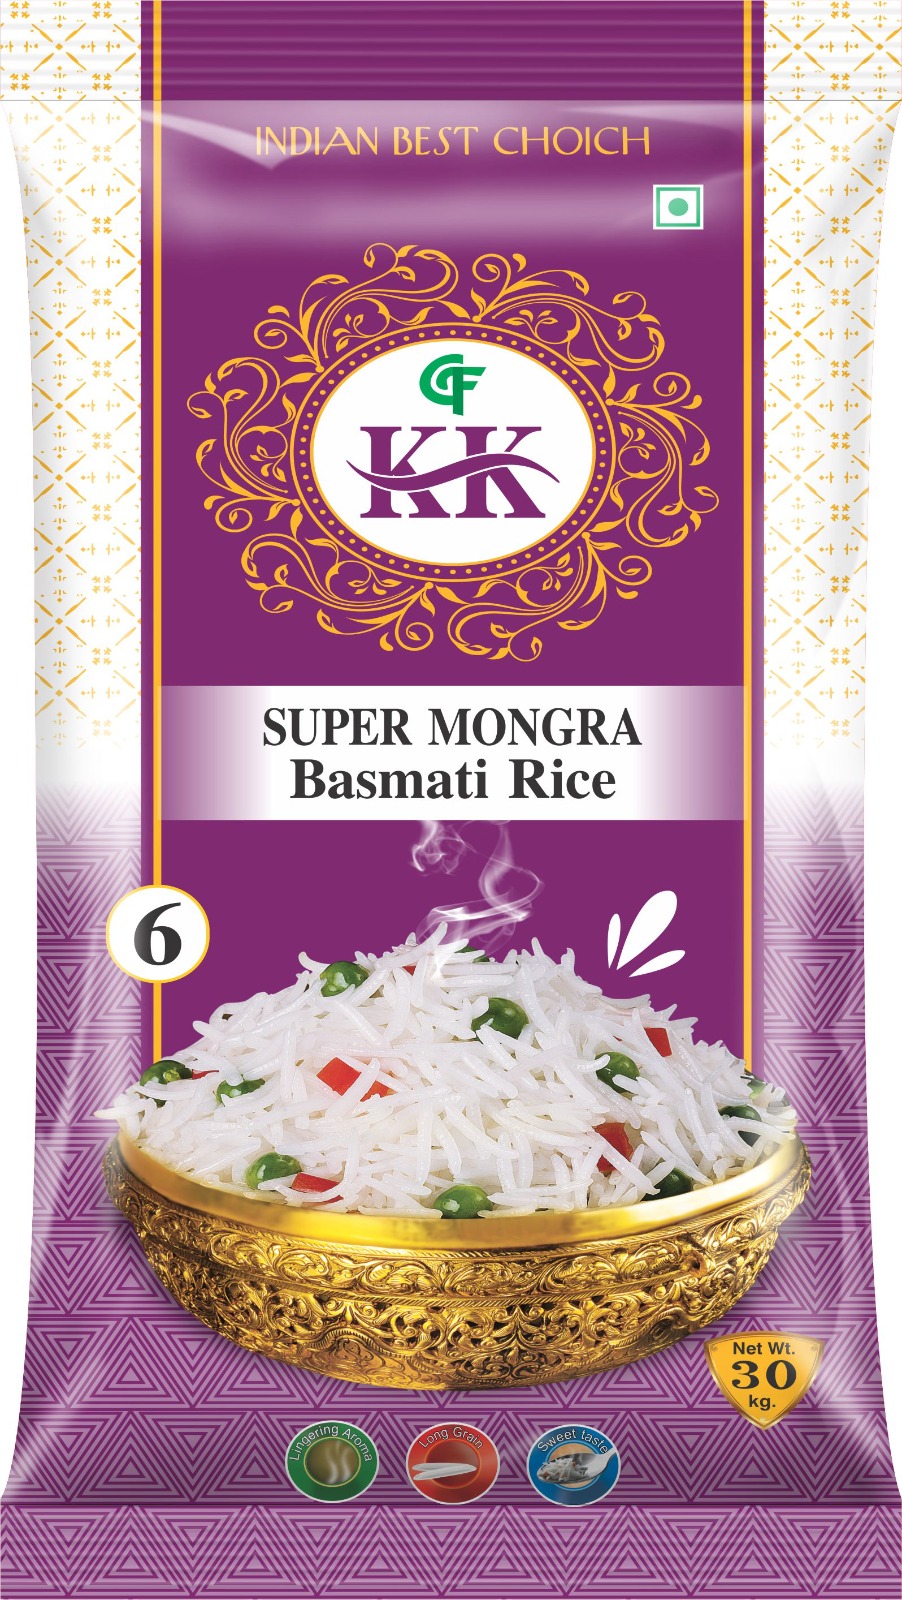 1401 Rice (Super Mongra Basmati Rice)